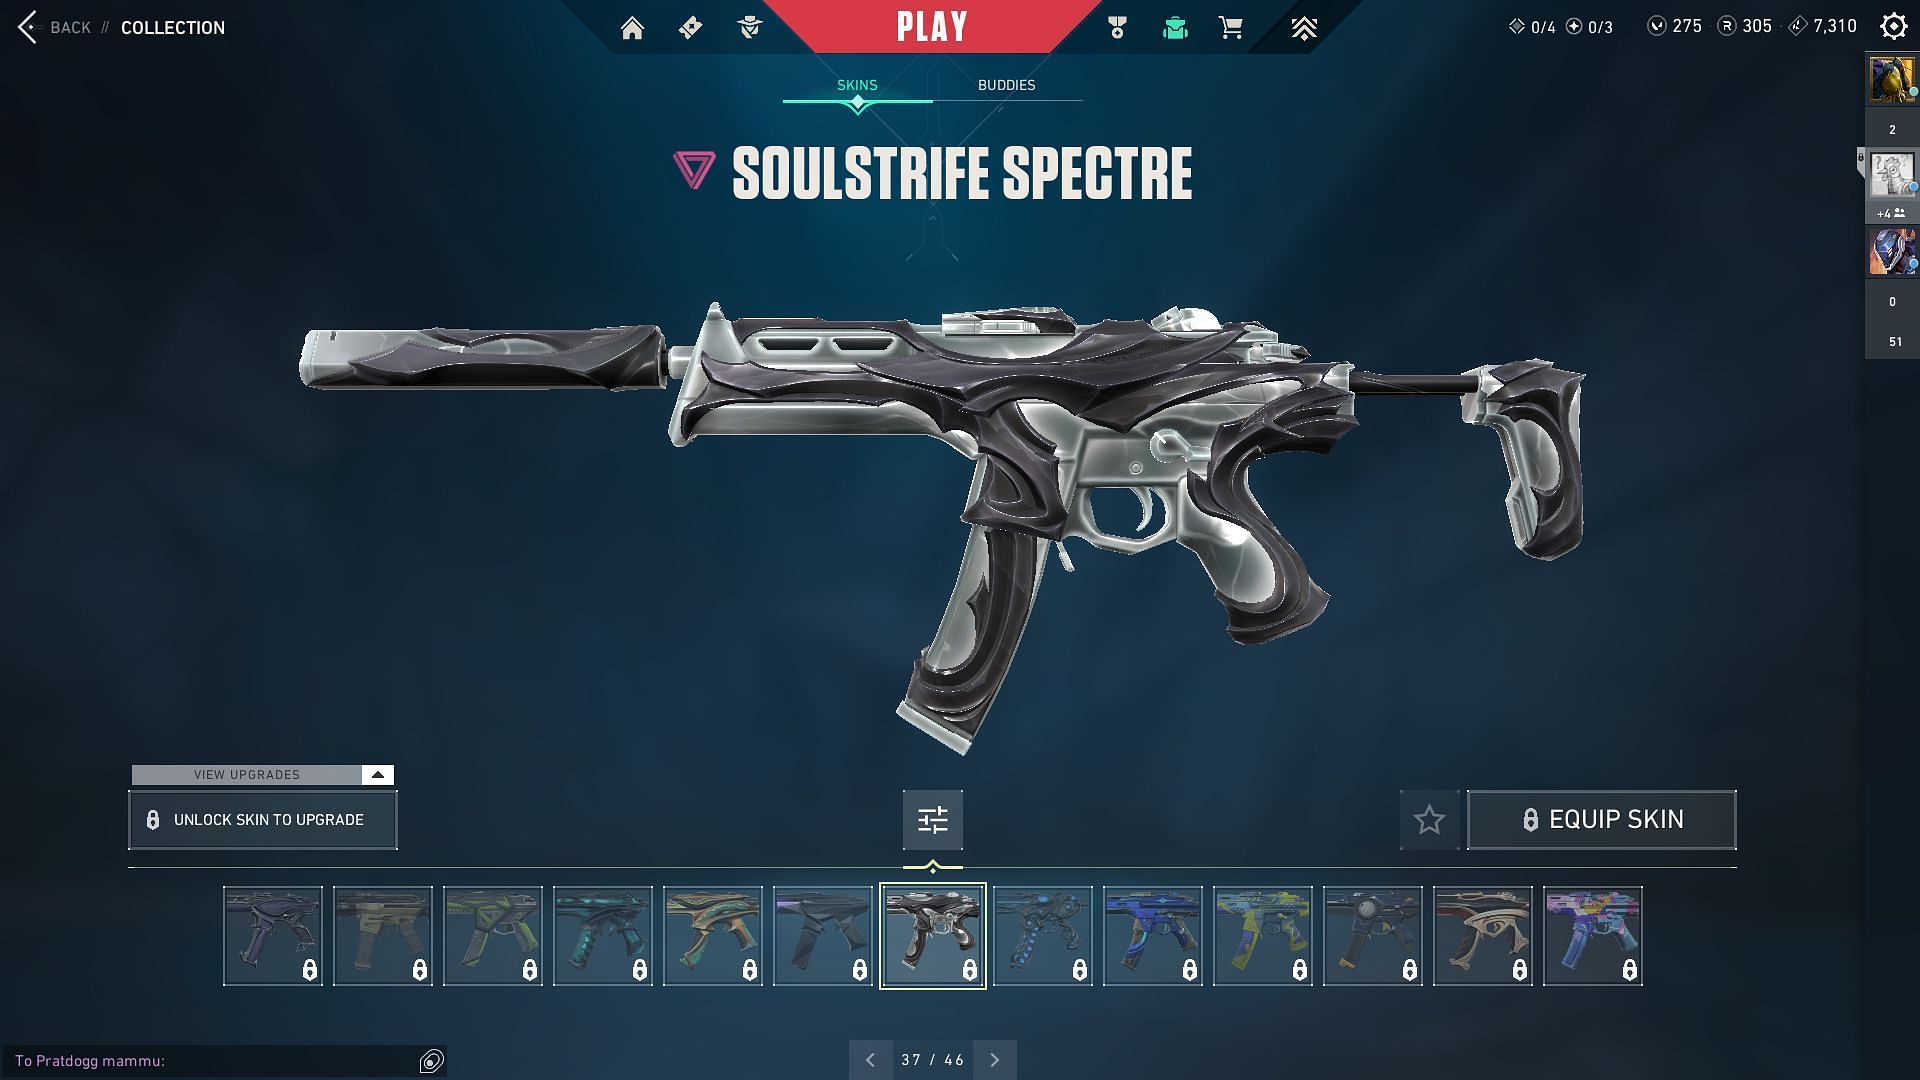 Soulstfire Spectre (Image via Sportskeeda and Riot Games)